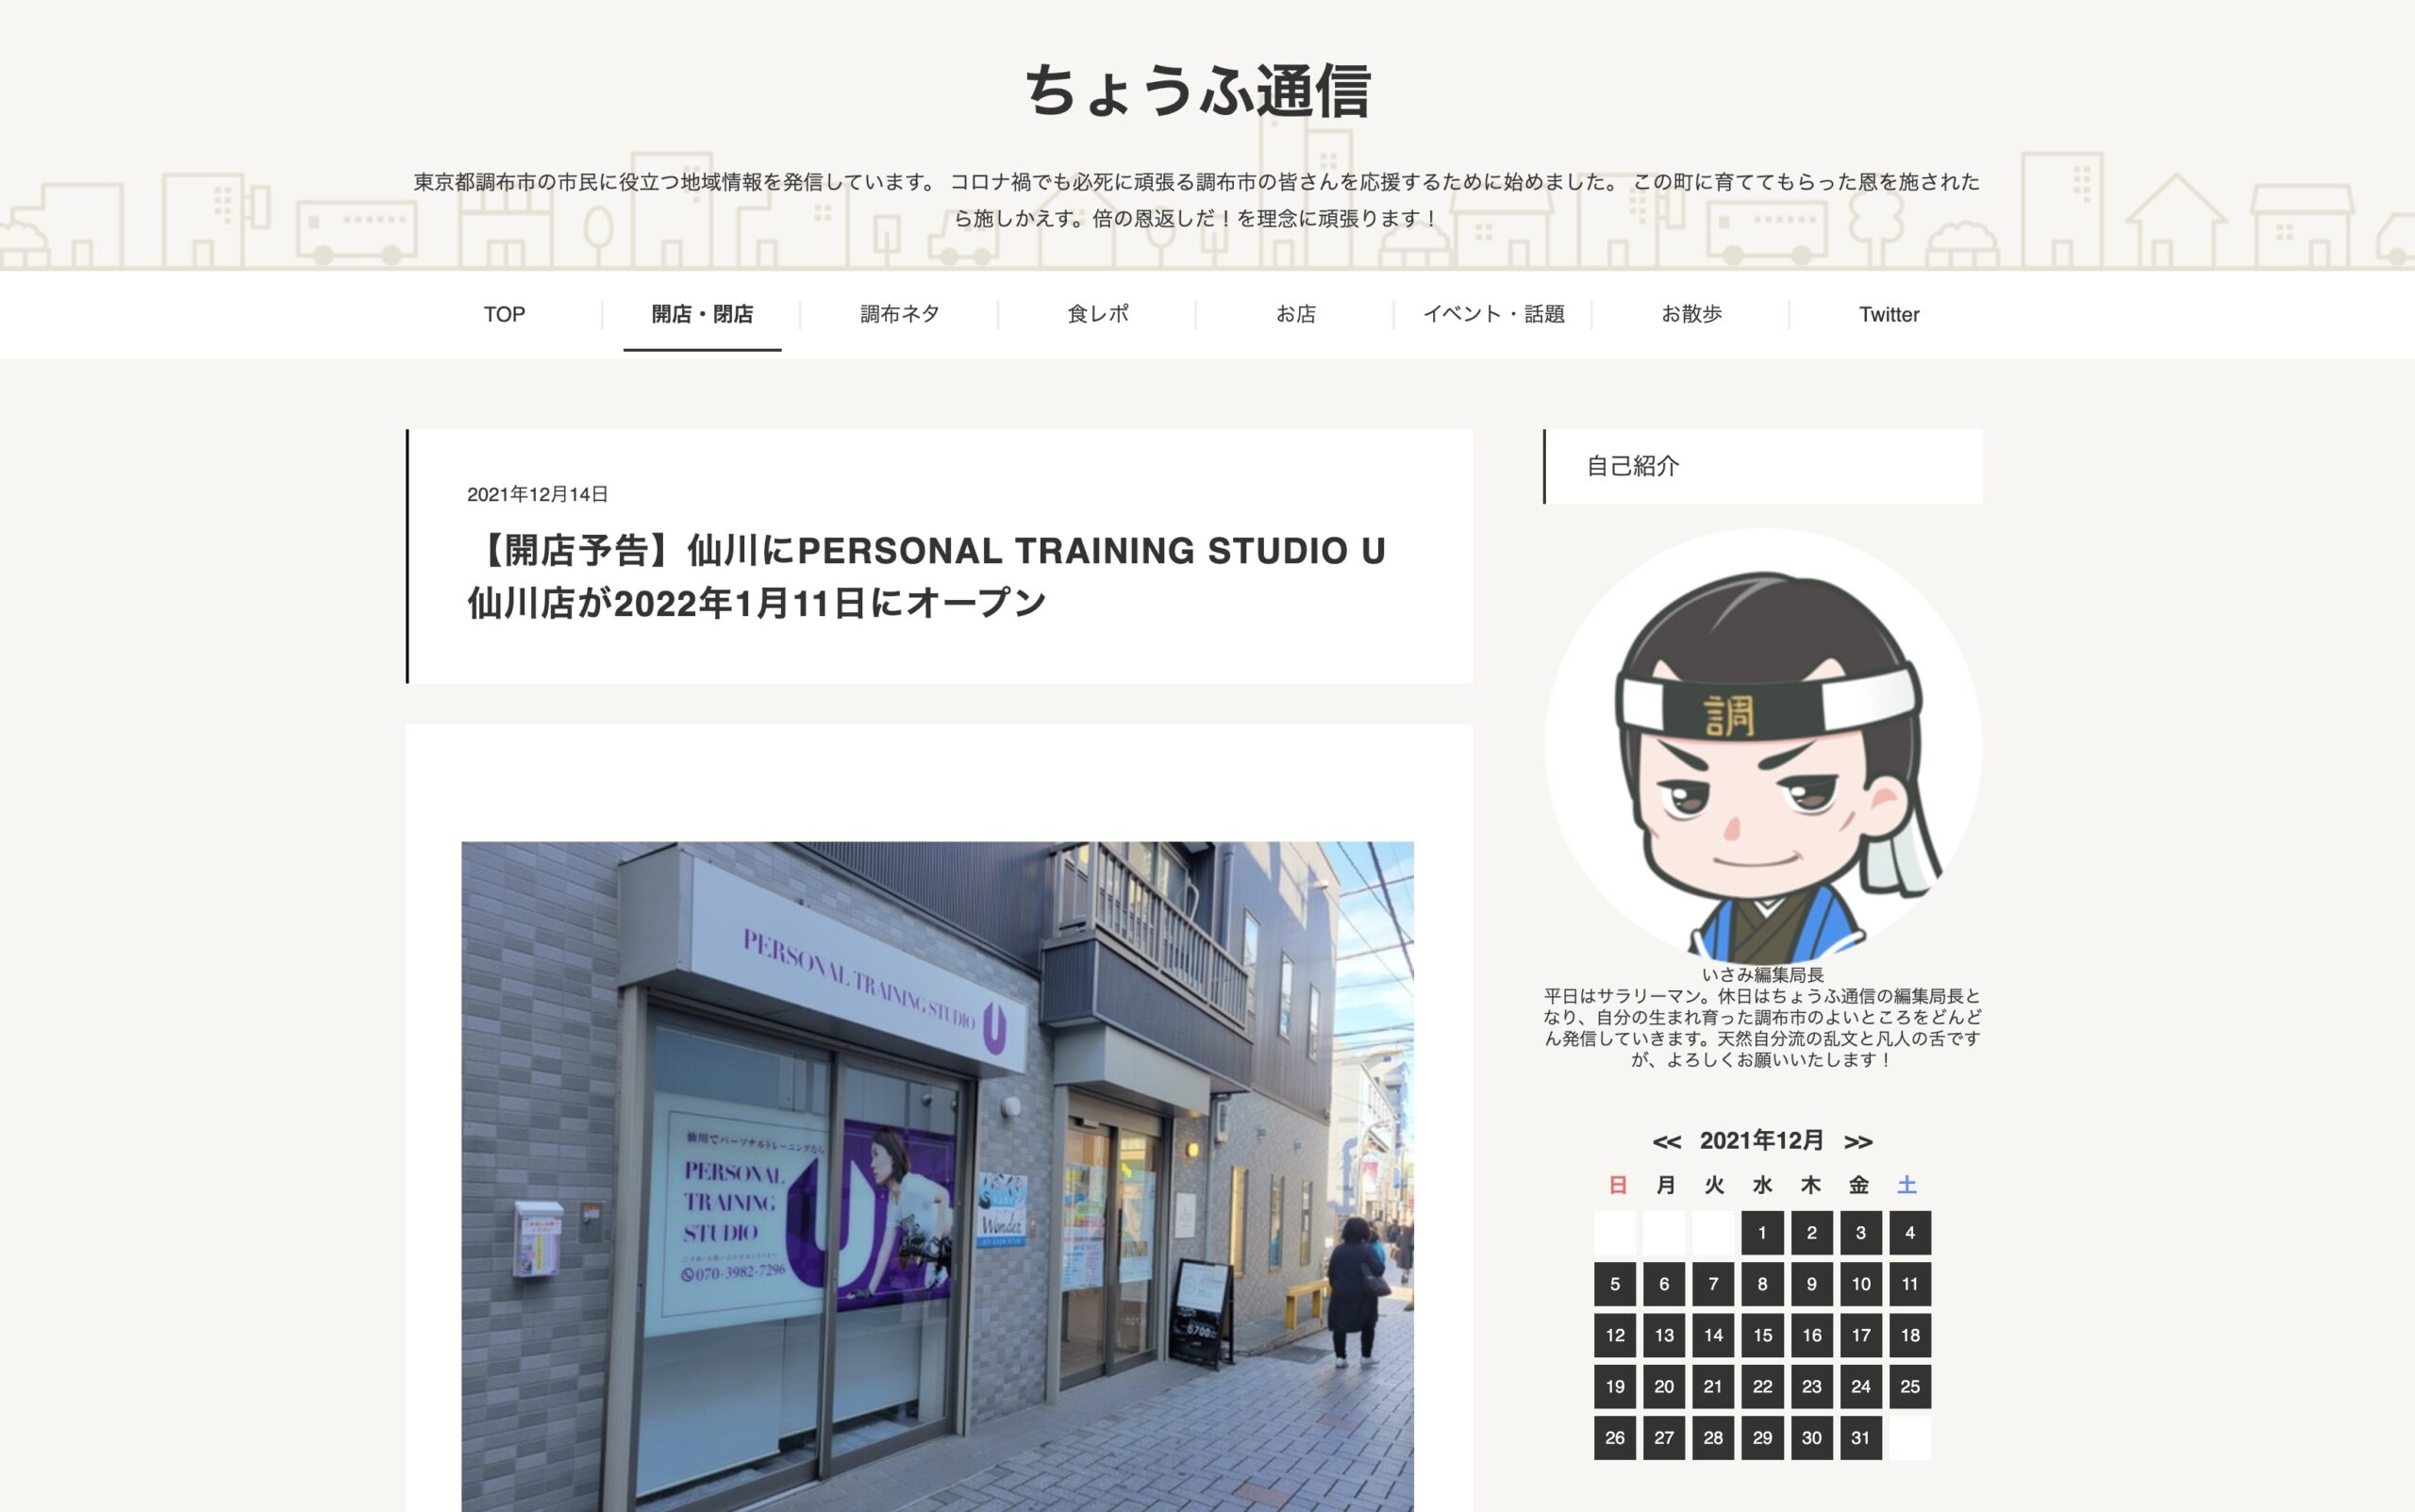 PERSONAL TRAINING STUDIO U 仙川店がちょうふ通信様に掲載されました